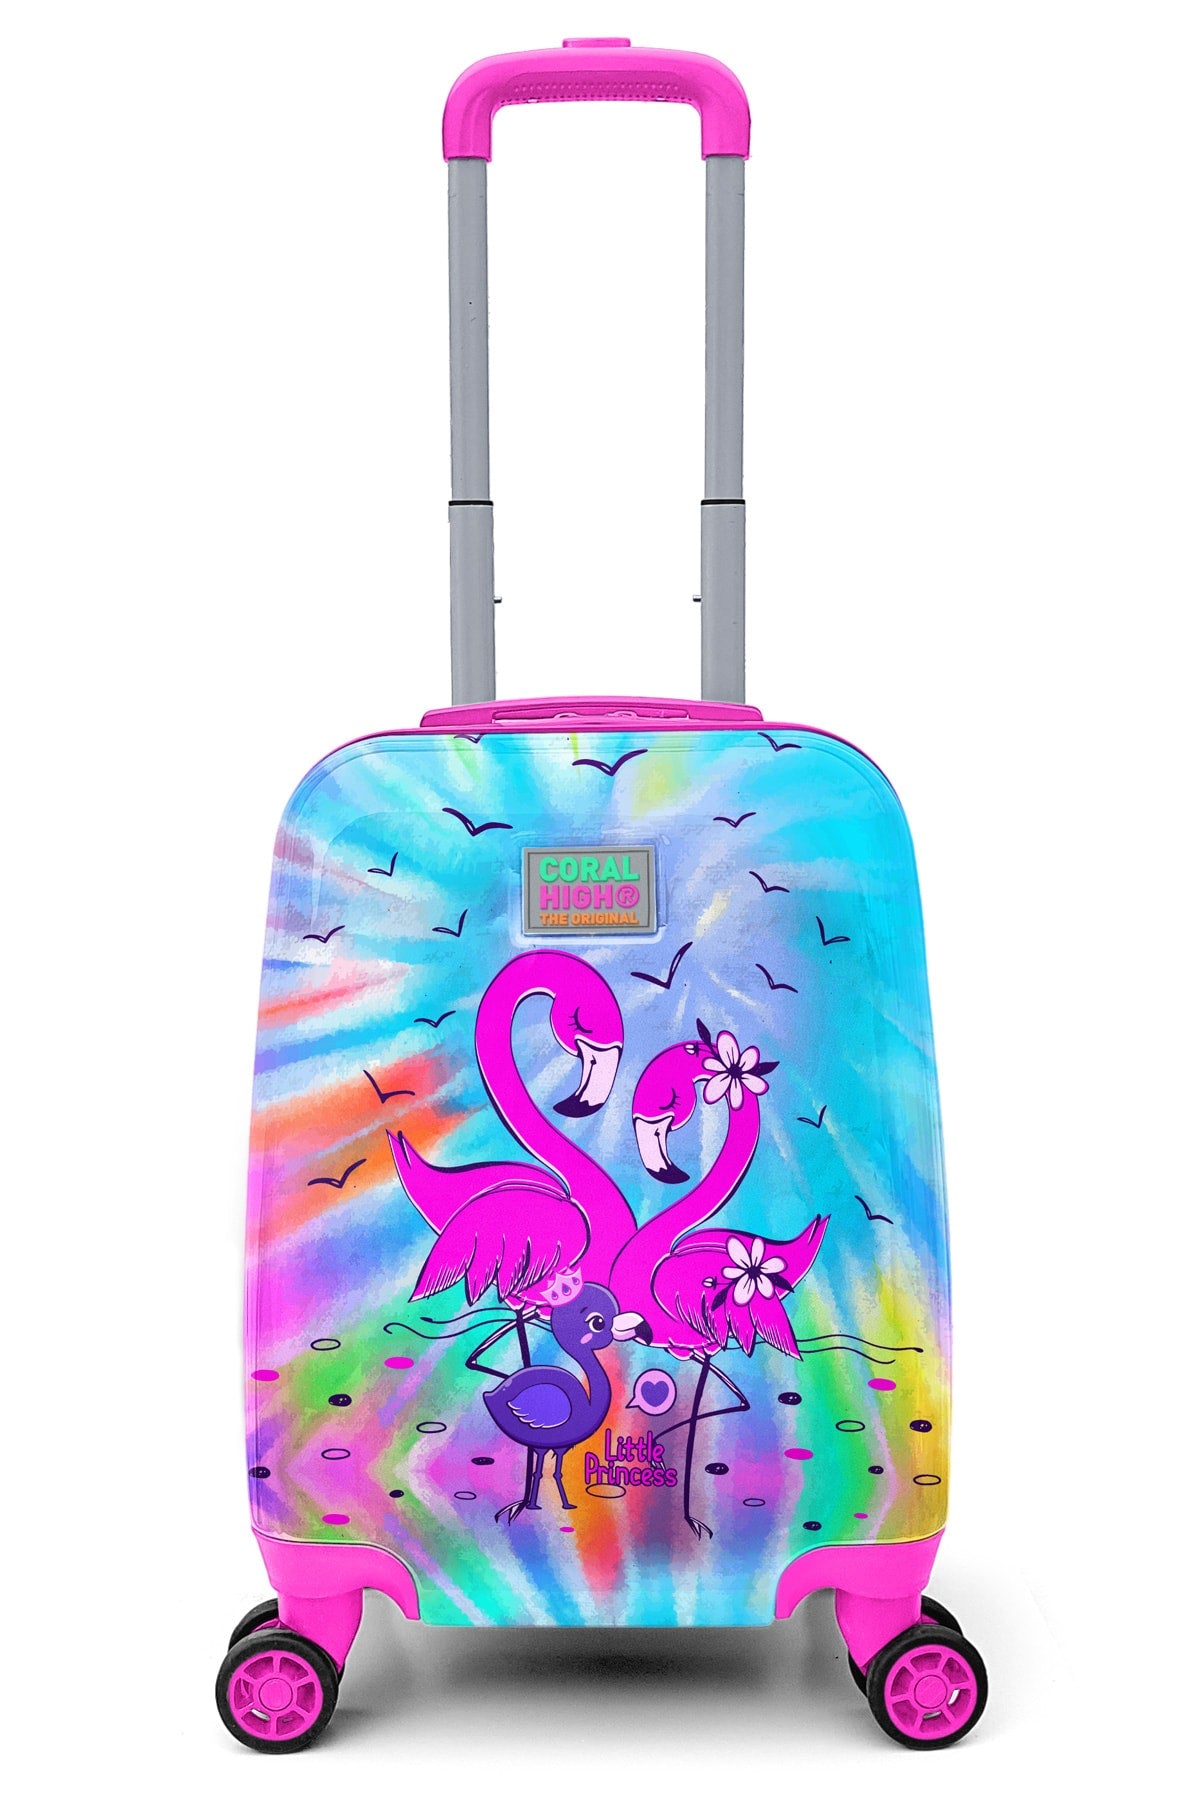 Kids Blue Pink Flamingo Patterned Child Suitcase 16702